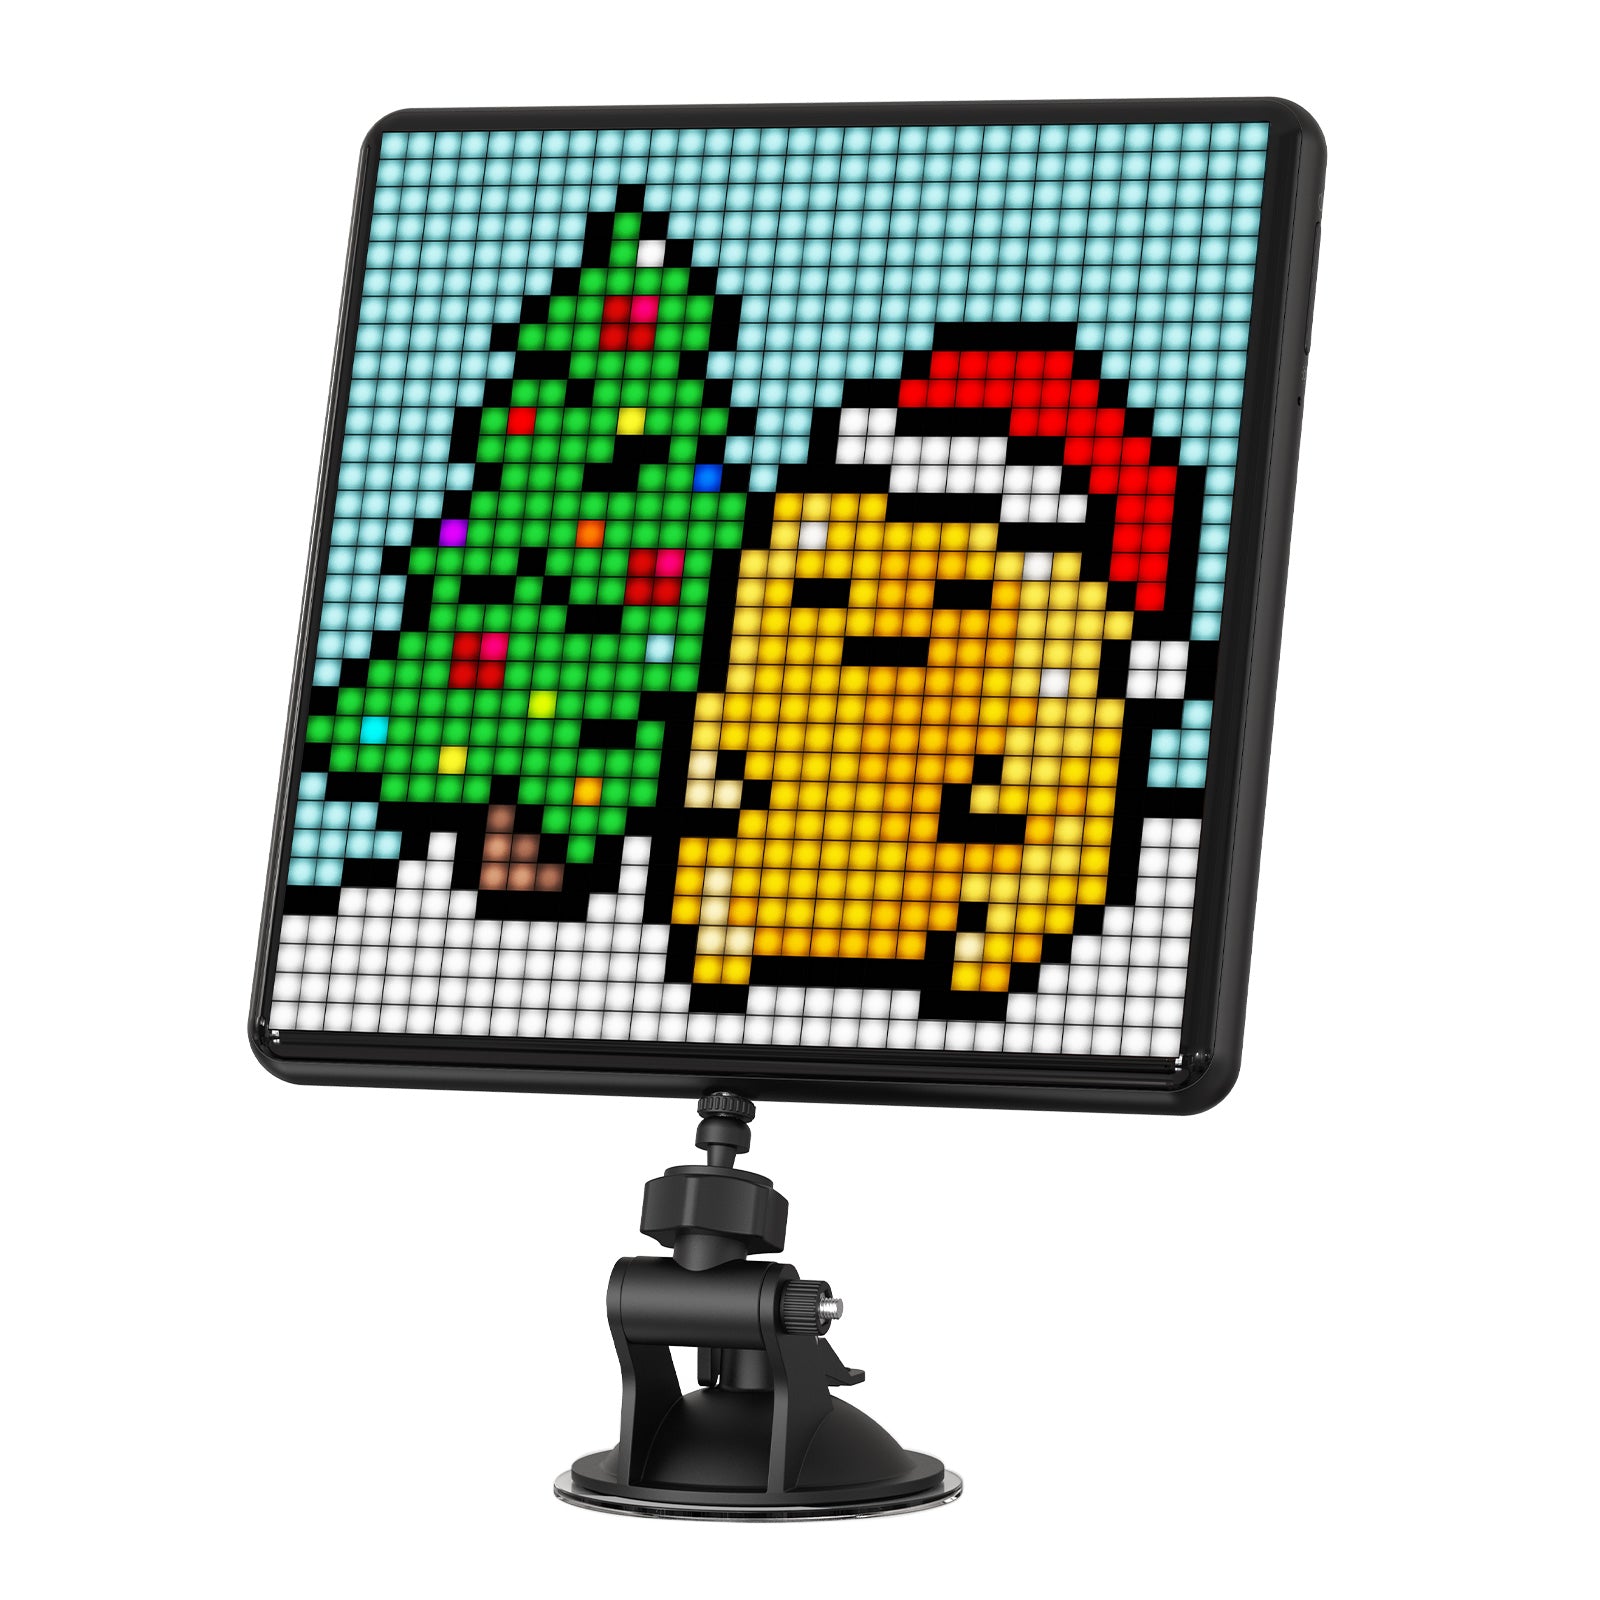 Divoom Pixel Art Wall Frame 32x32 / Pixoo Max